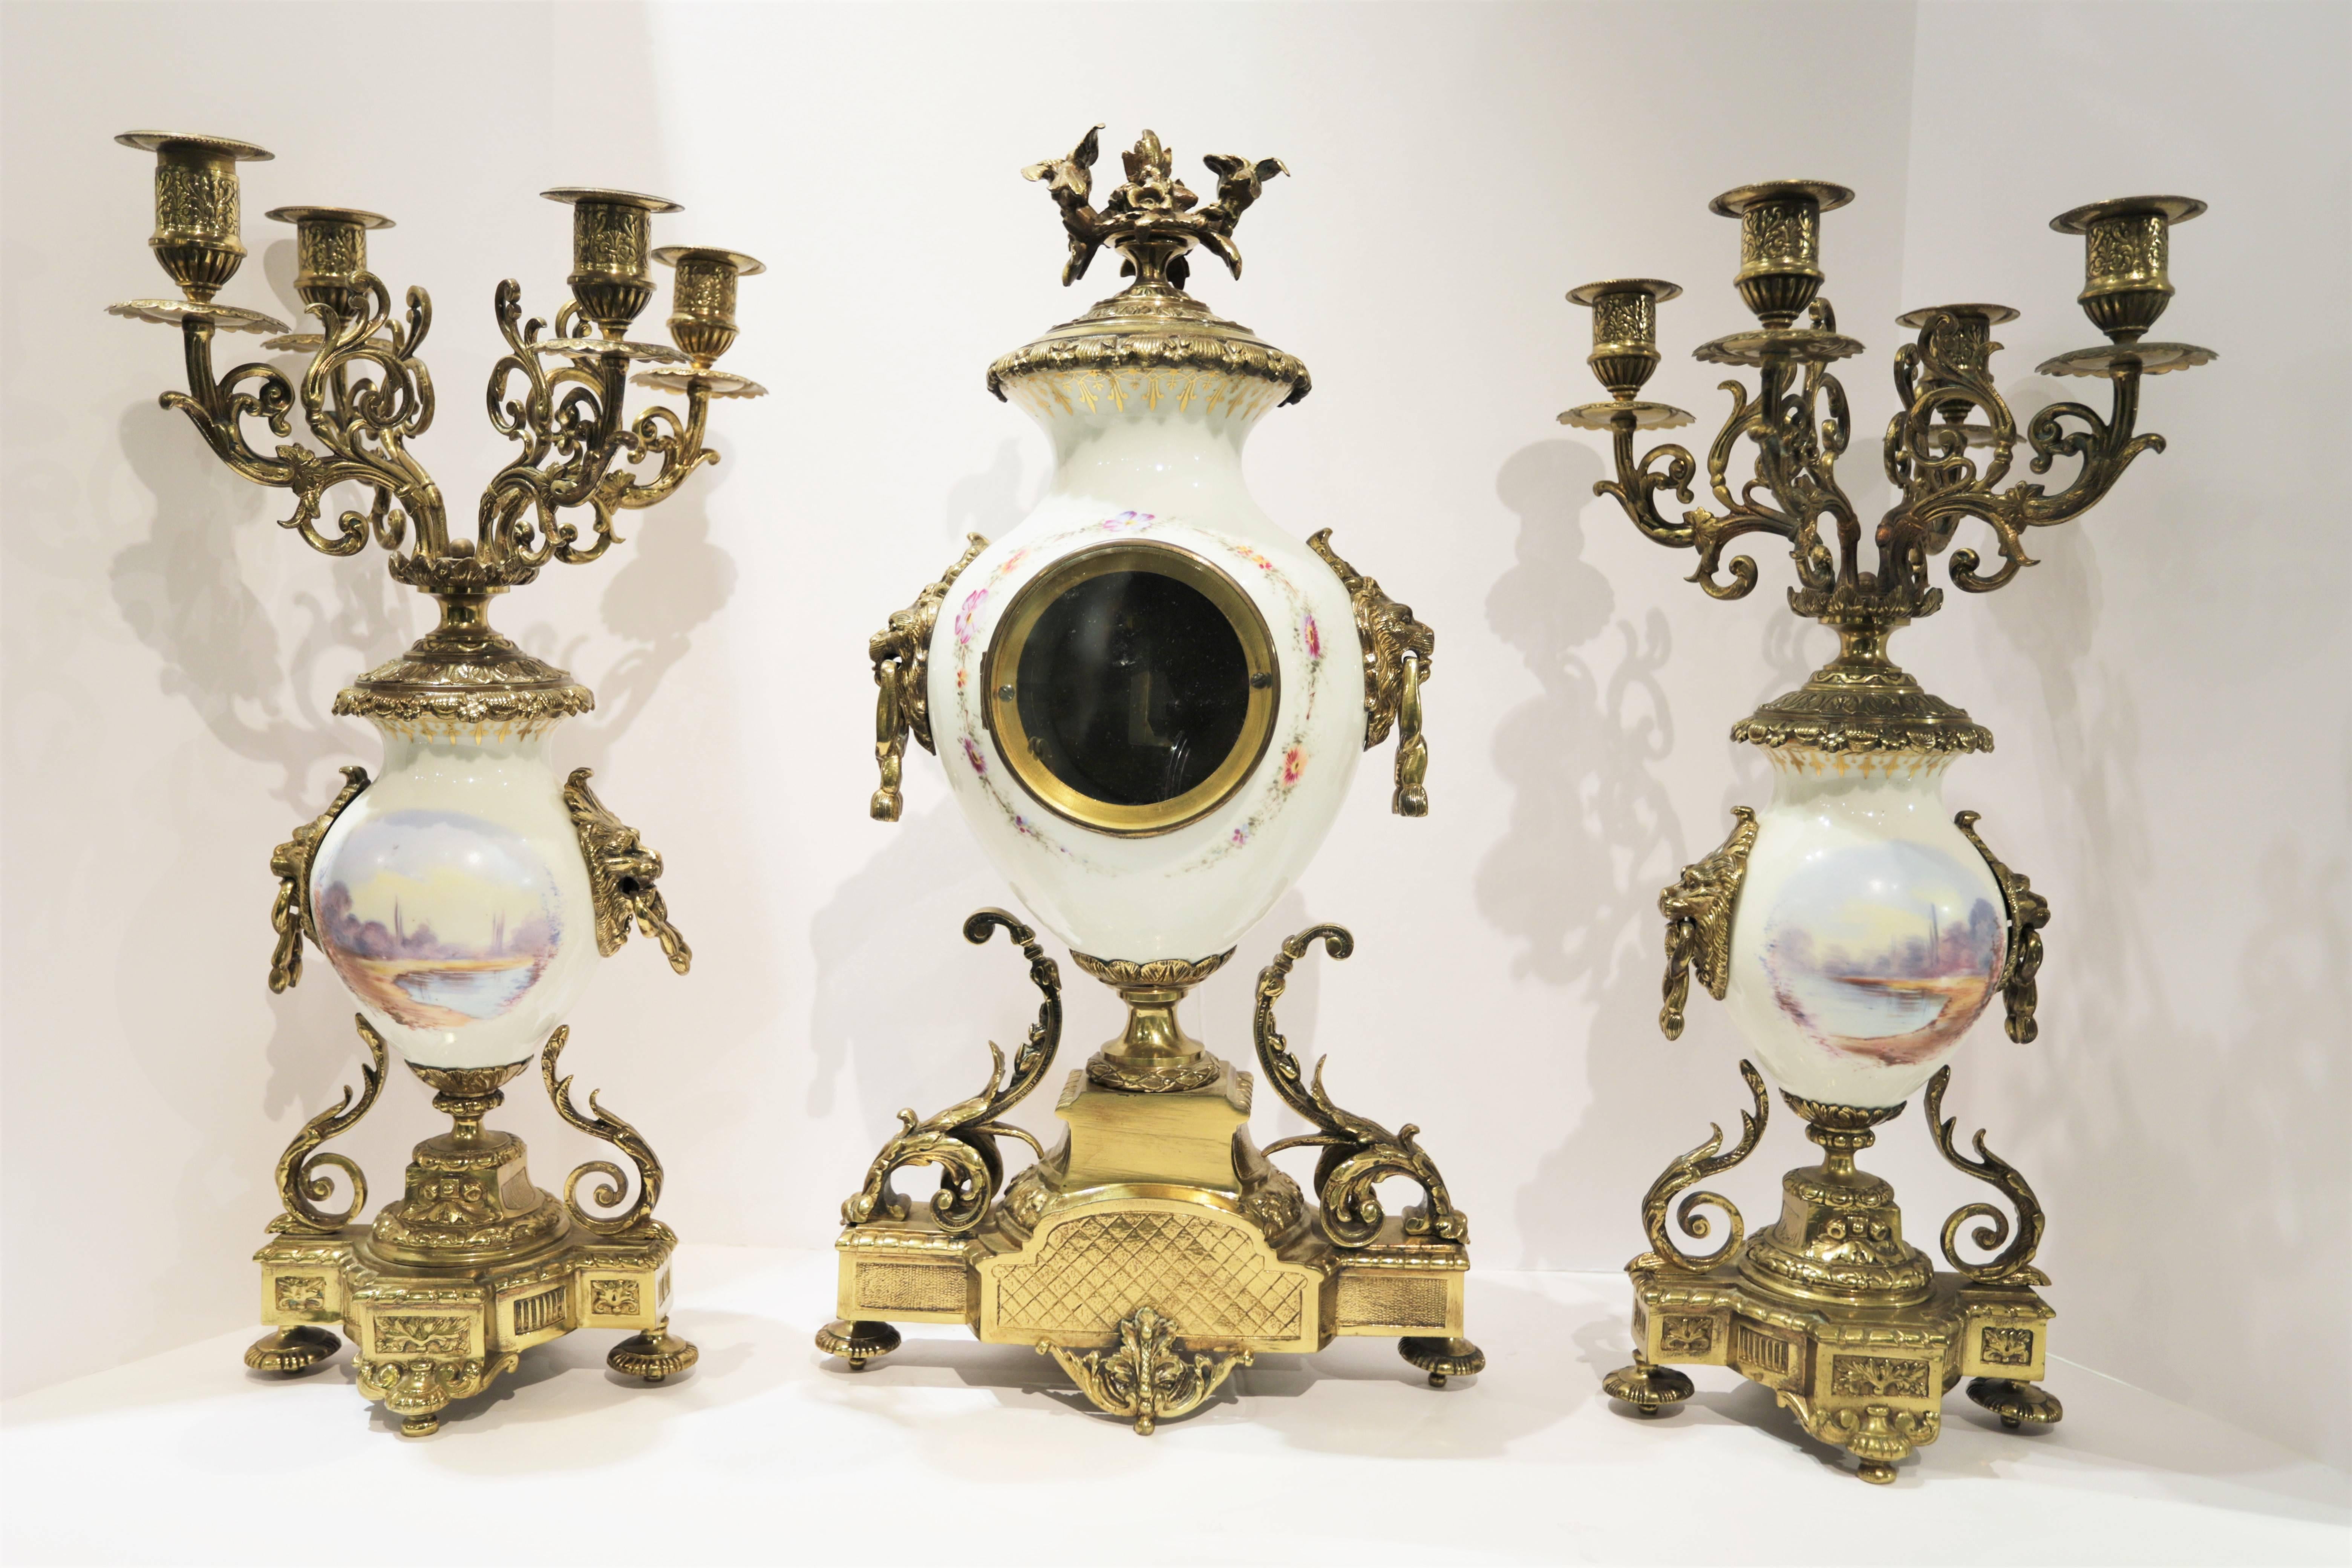 Three-piece French 19 century Louis XVI style Sevres porcelain bronze mounted clock set.